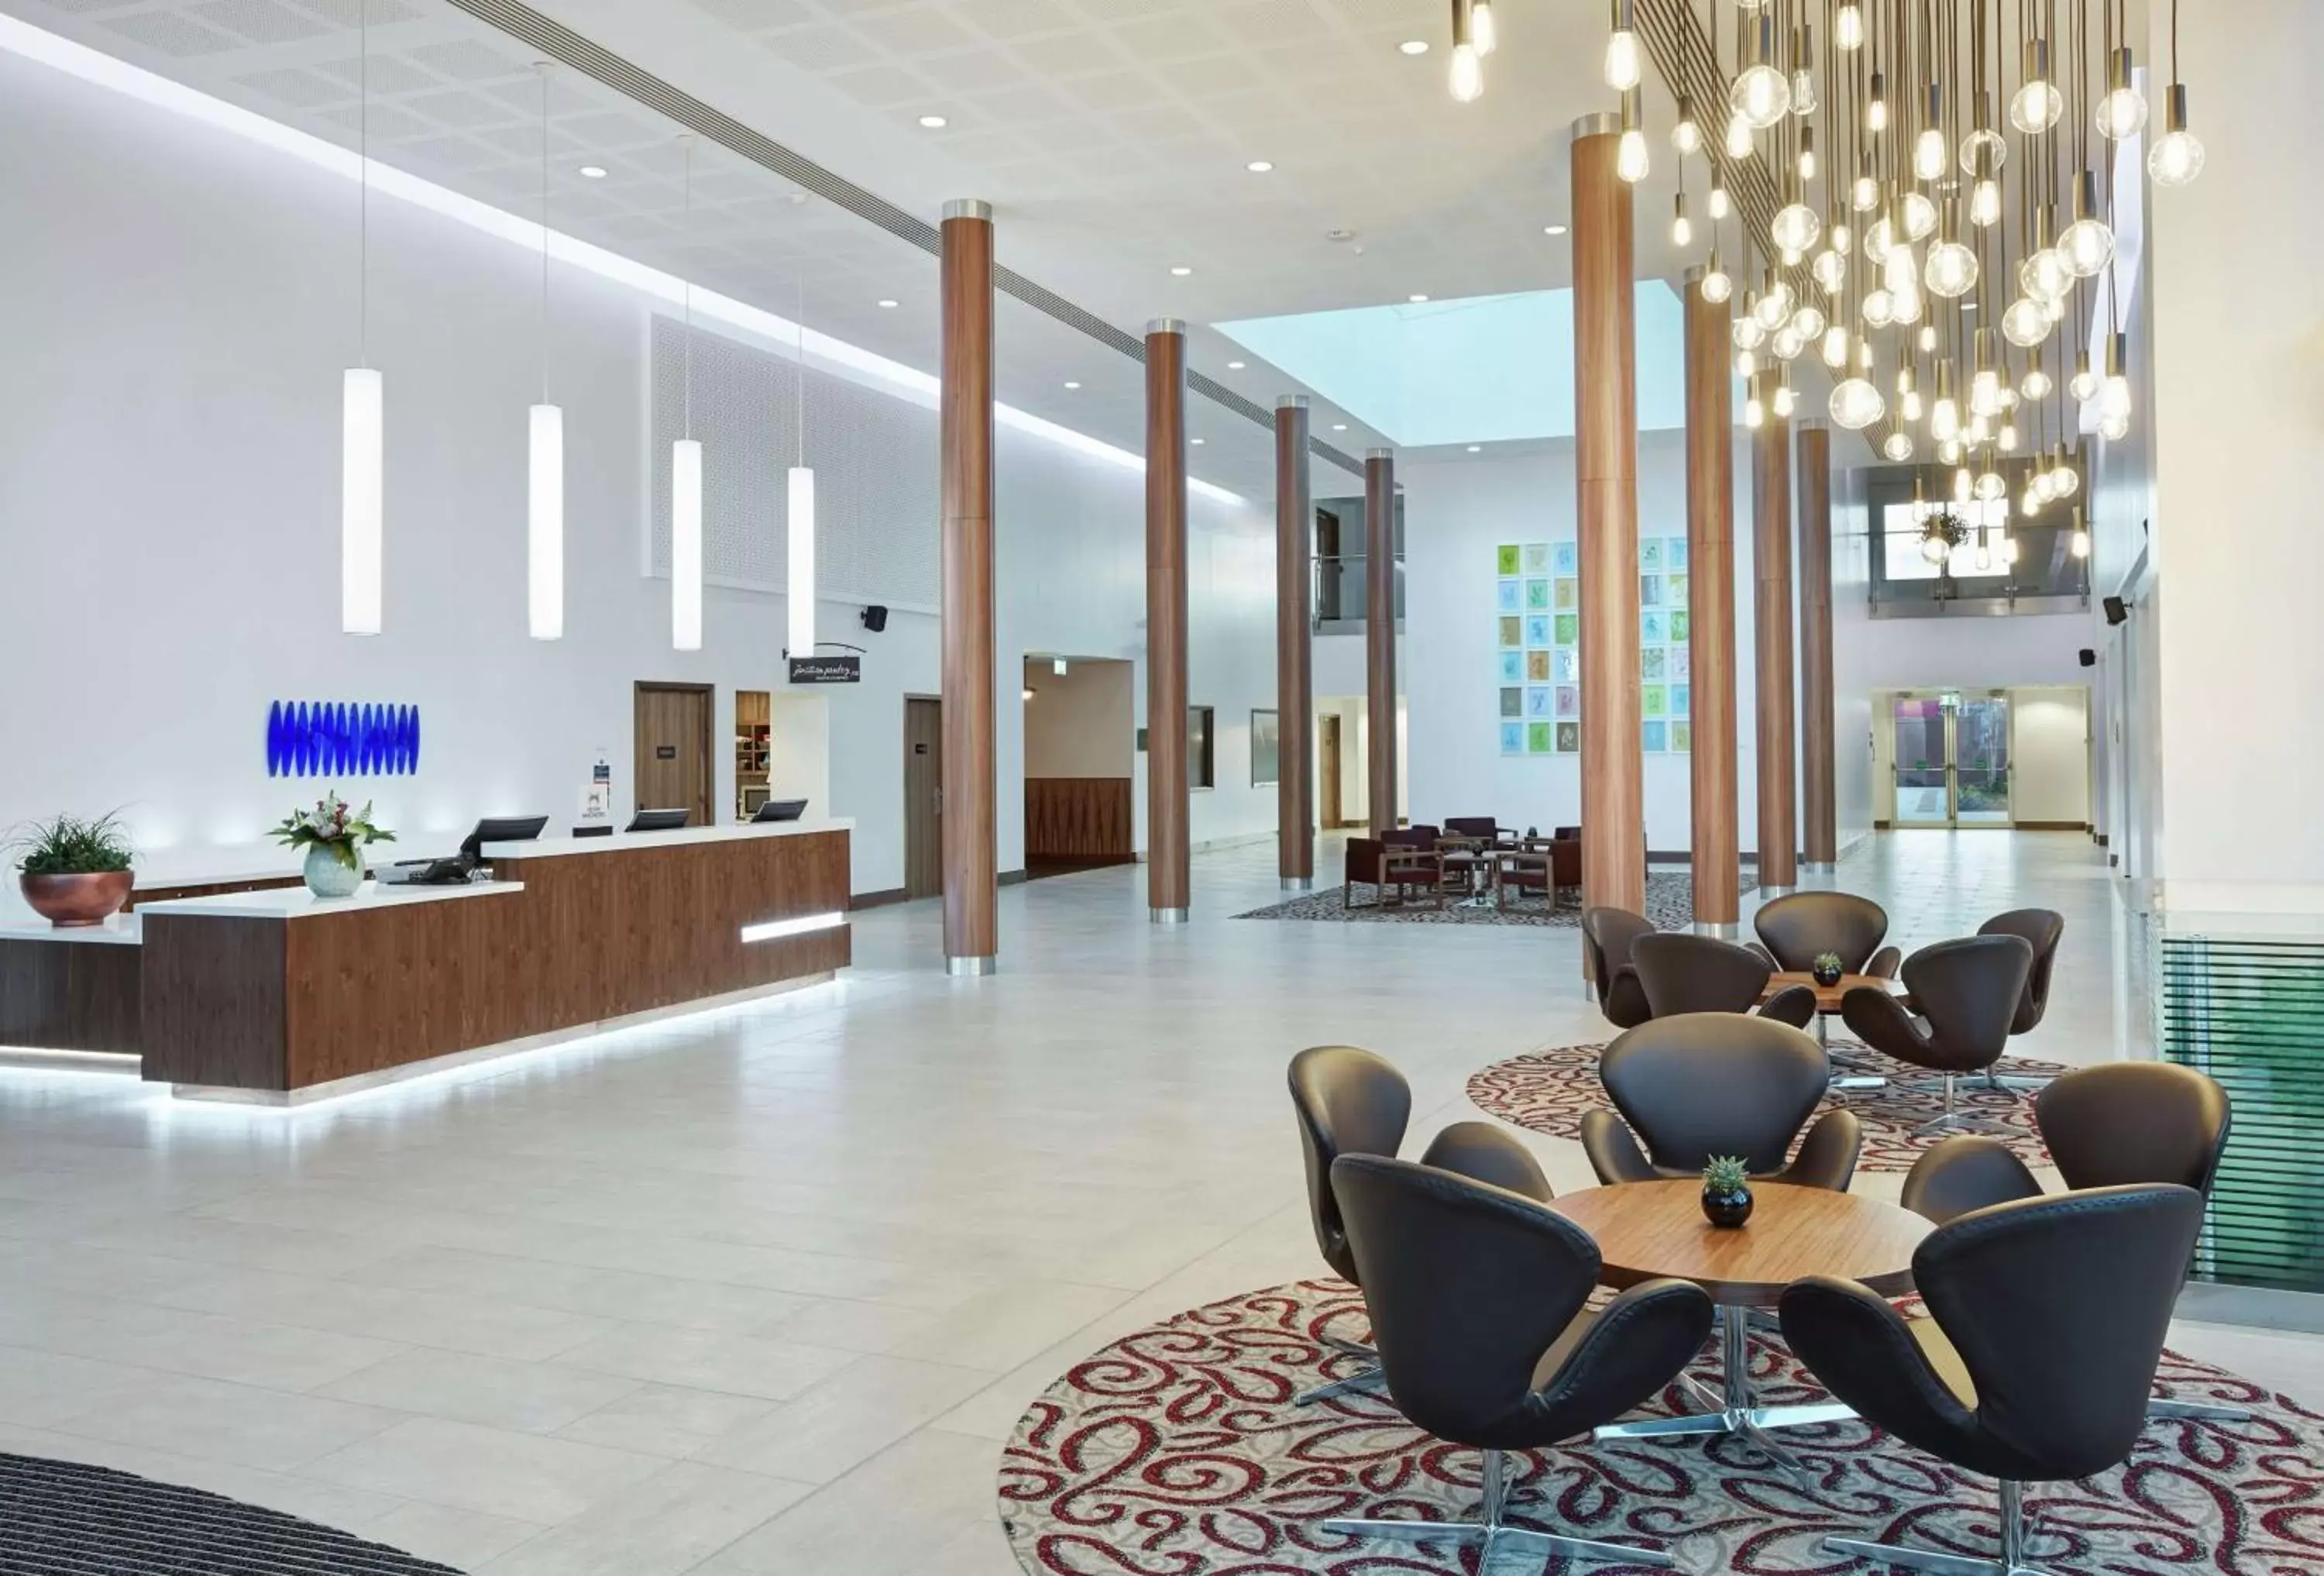 Lobby or reception in Hilton Garden Inn Sunderland